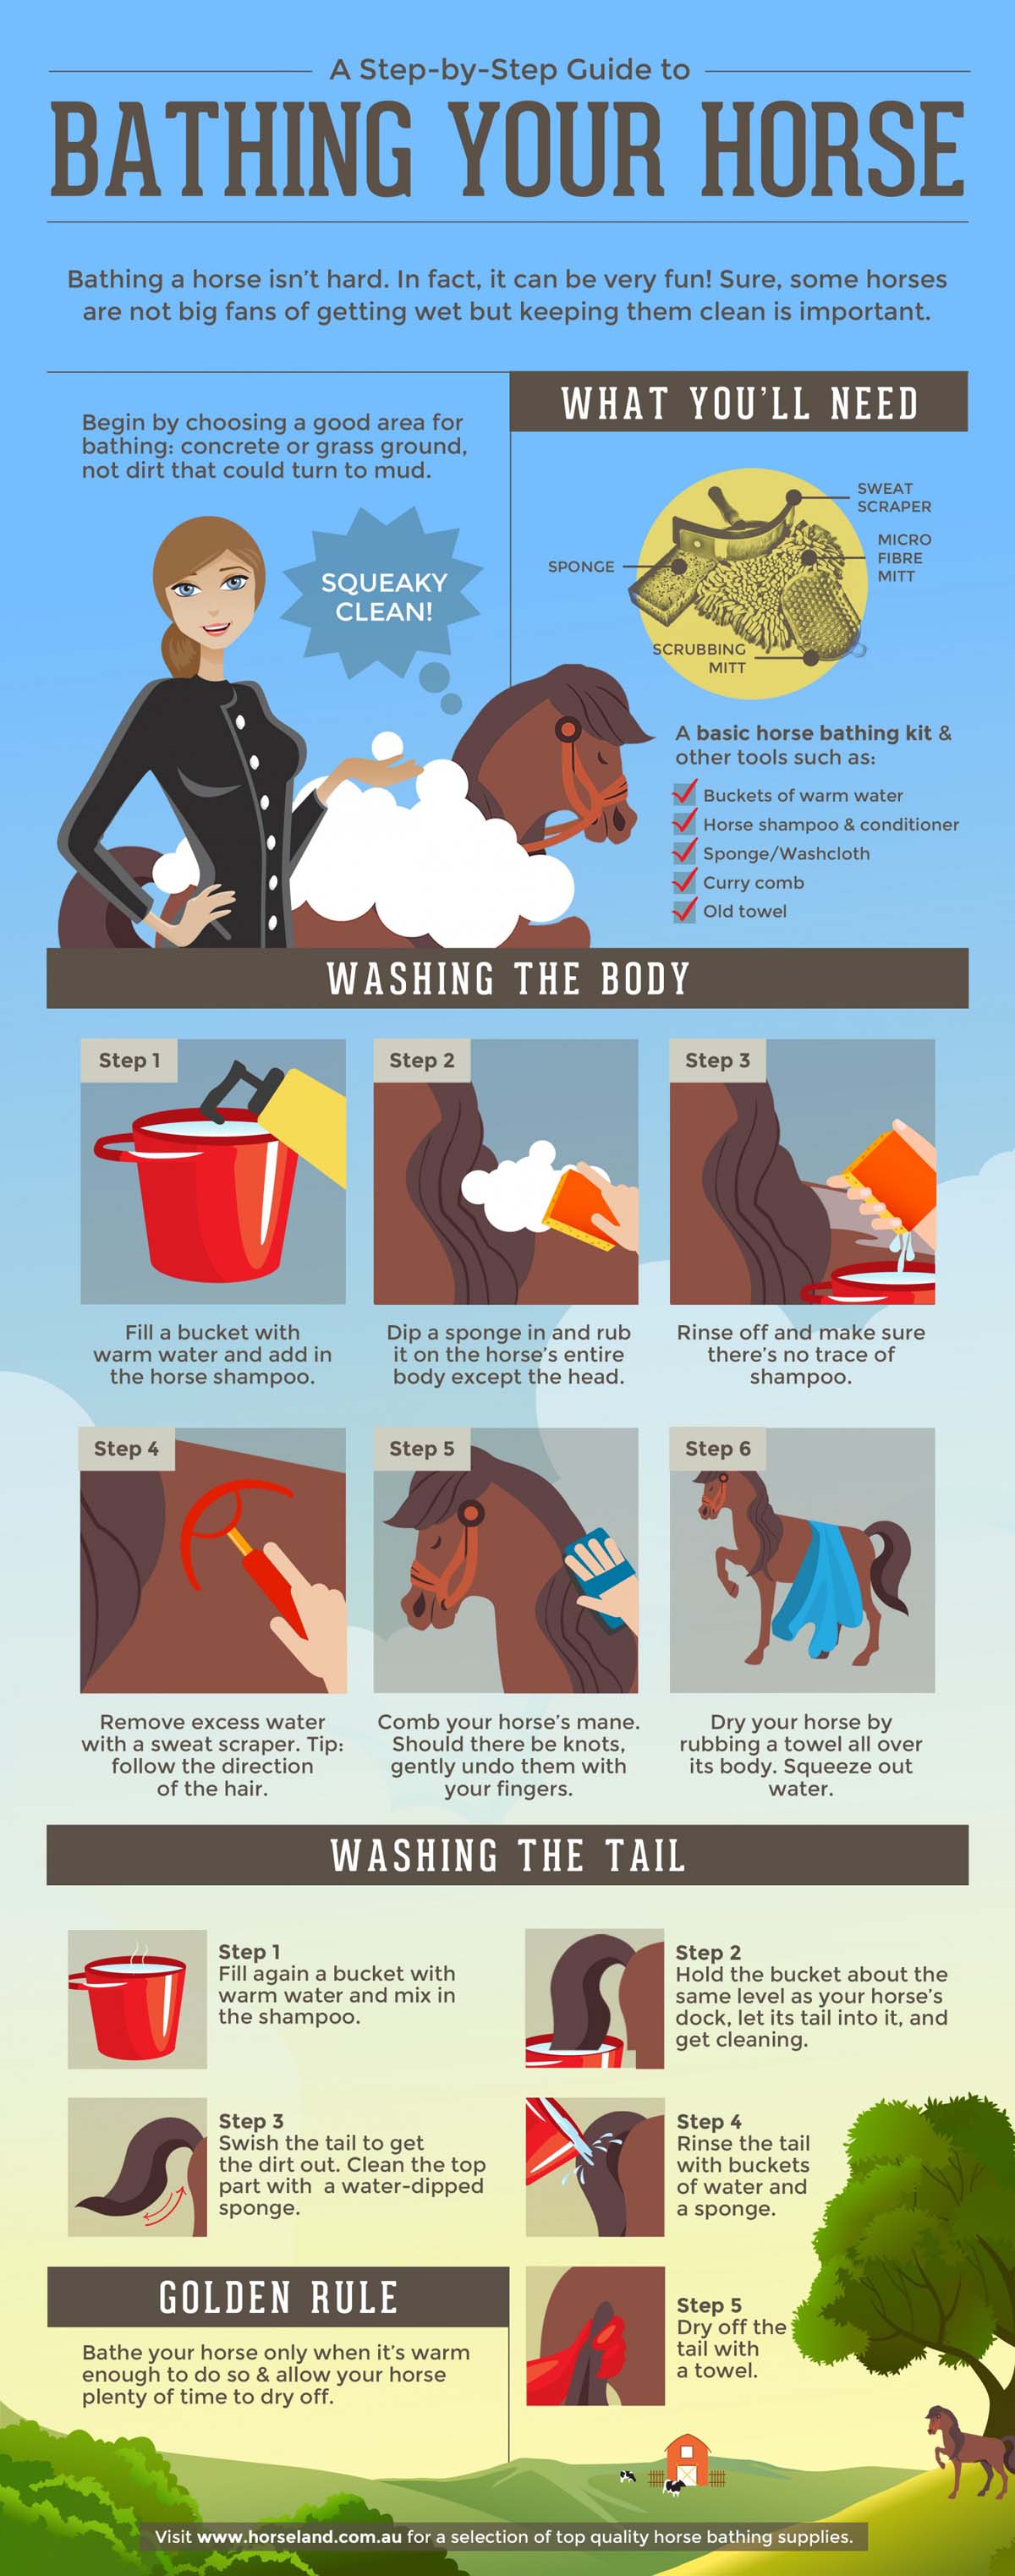 Washing a horse